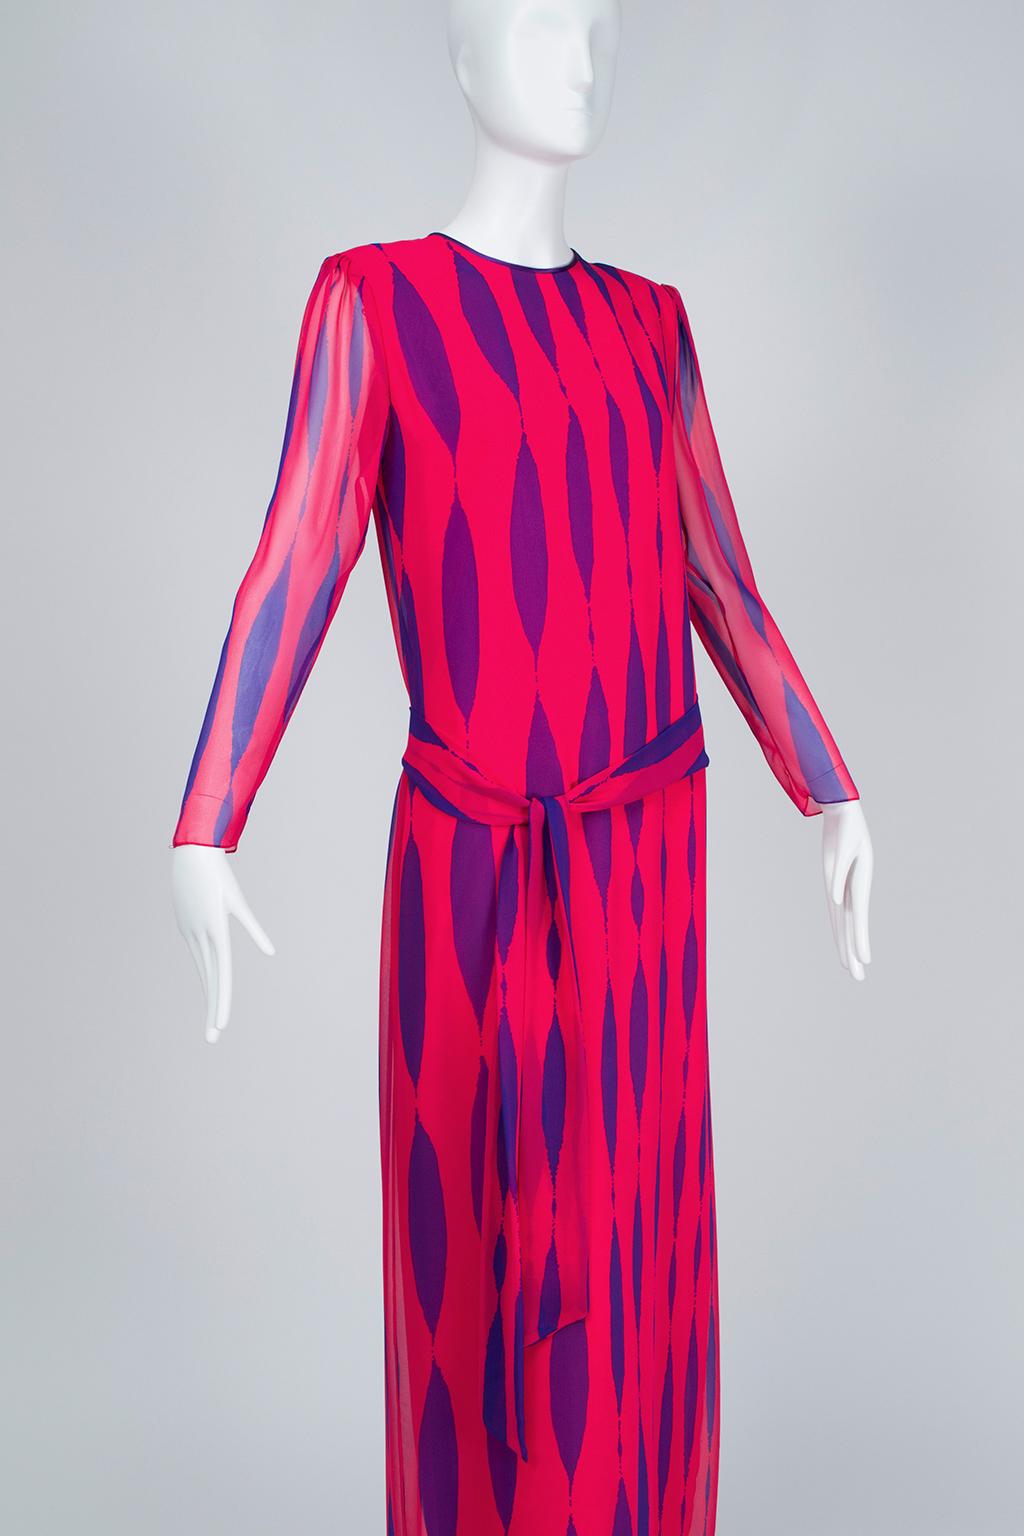 Women's Hanae Mori Fuchsia and Purple Pop Art Column Gown - Medium, 1980s For Sale